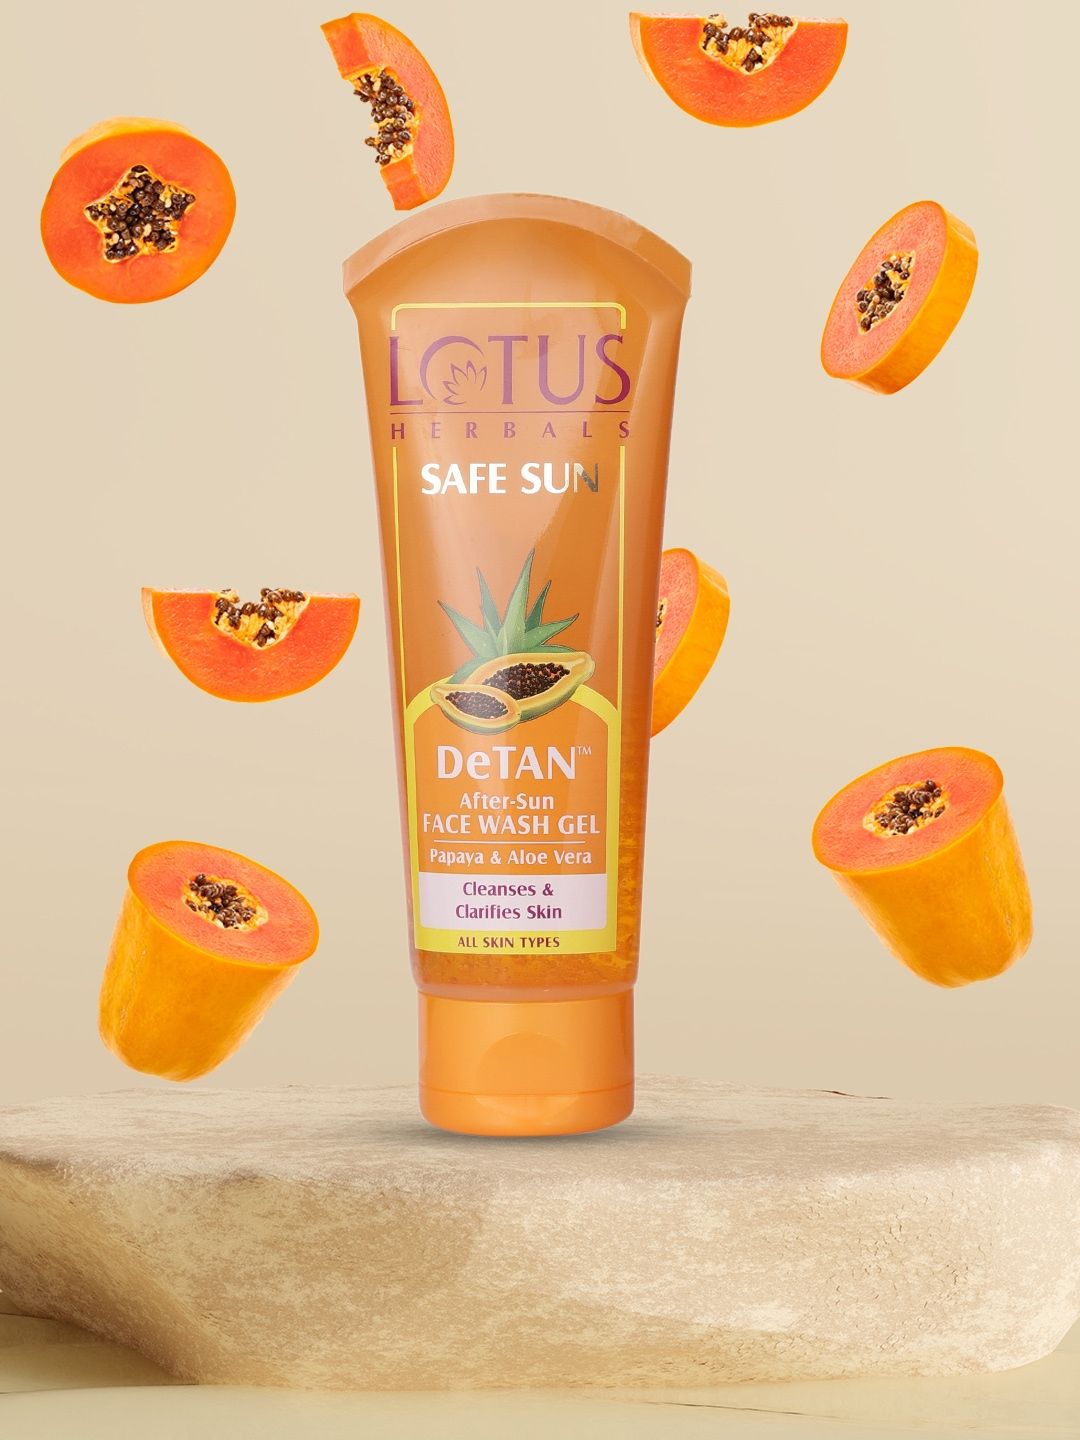 Myntra - Lotus Herbals Unisex Safe Sun DeTAN After-Sun Face Wash Gel – 100 g Price